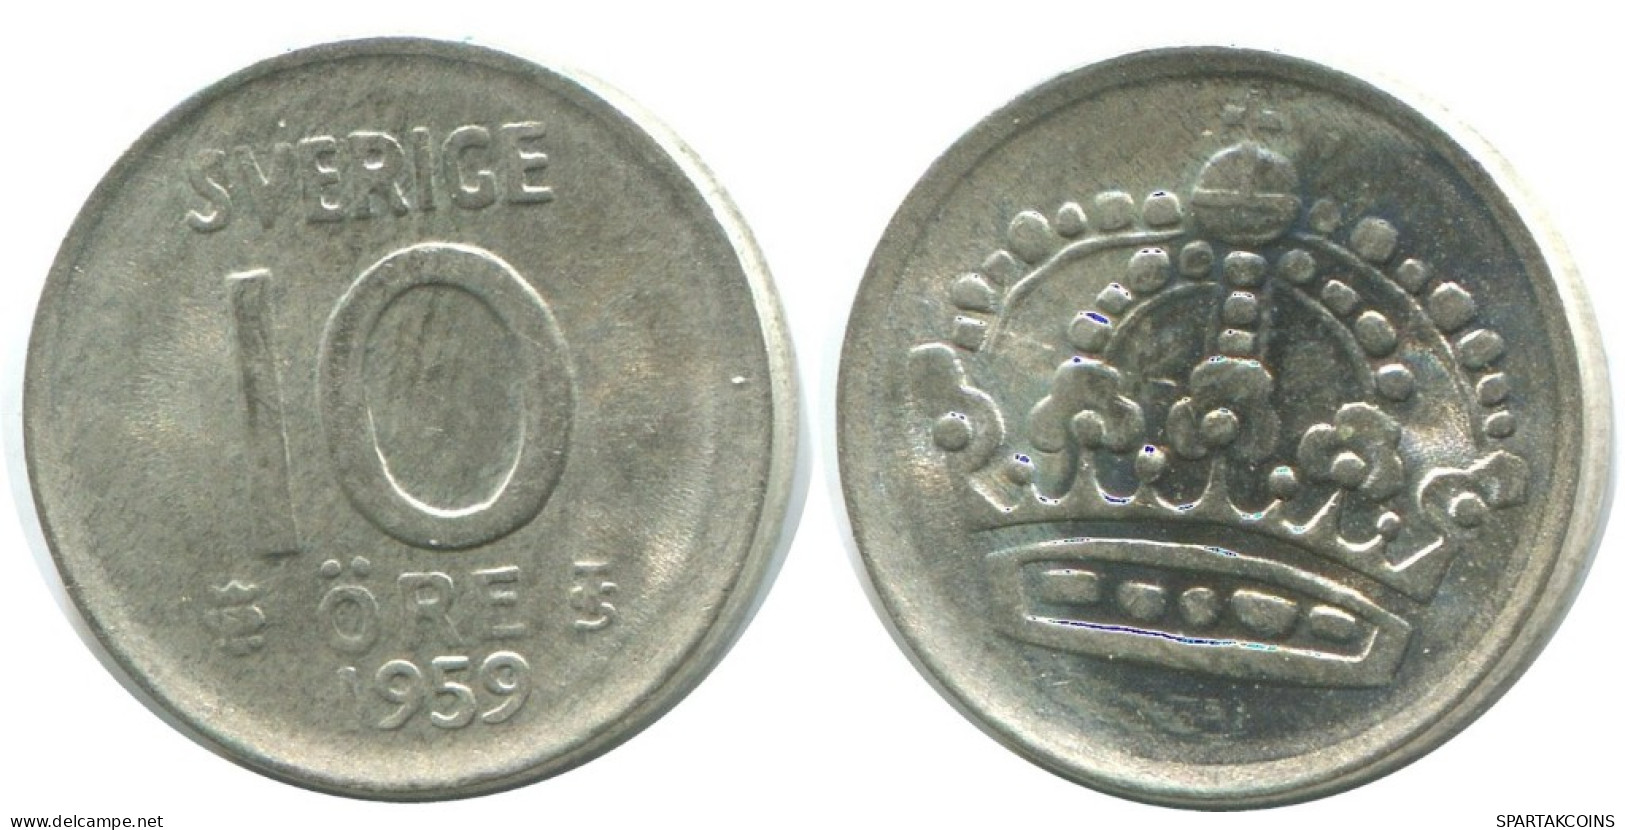 10 ORE 1959 SWEDEN SILVER Coin #AD023.2.U.A - Sweden